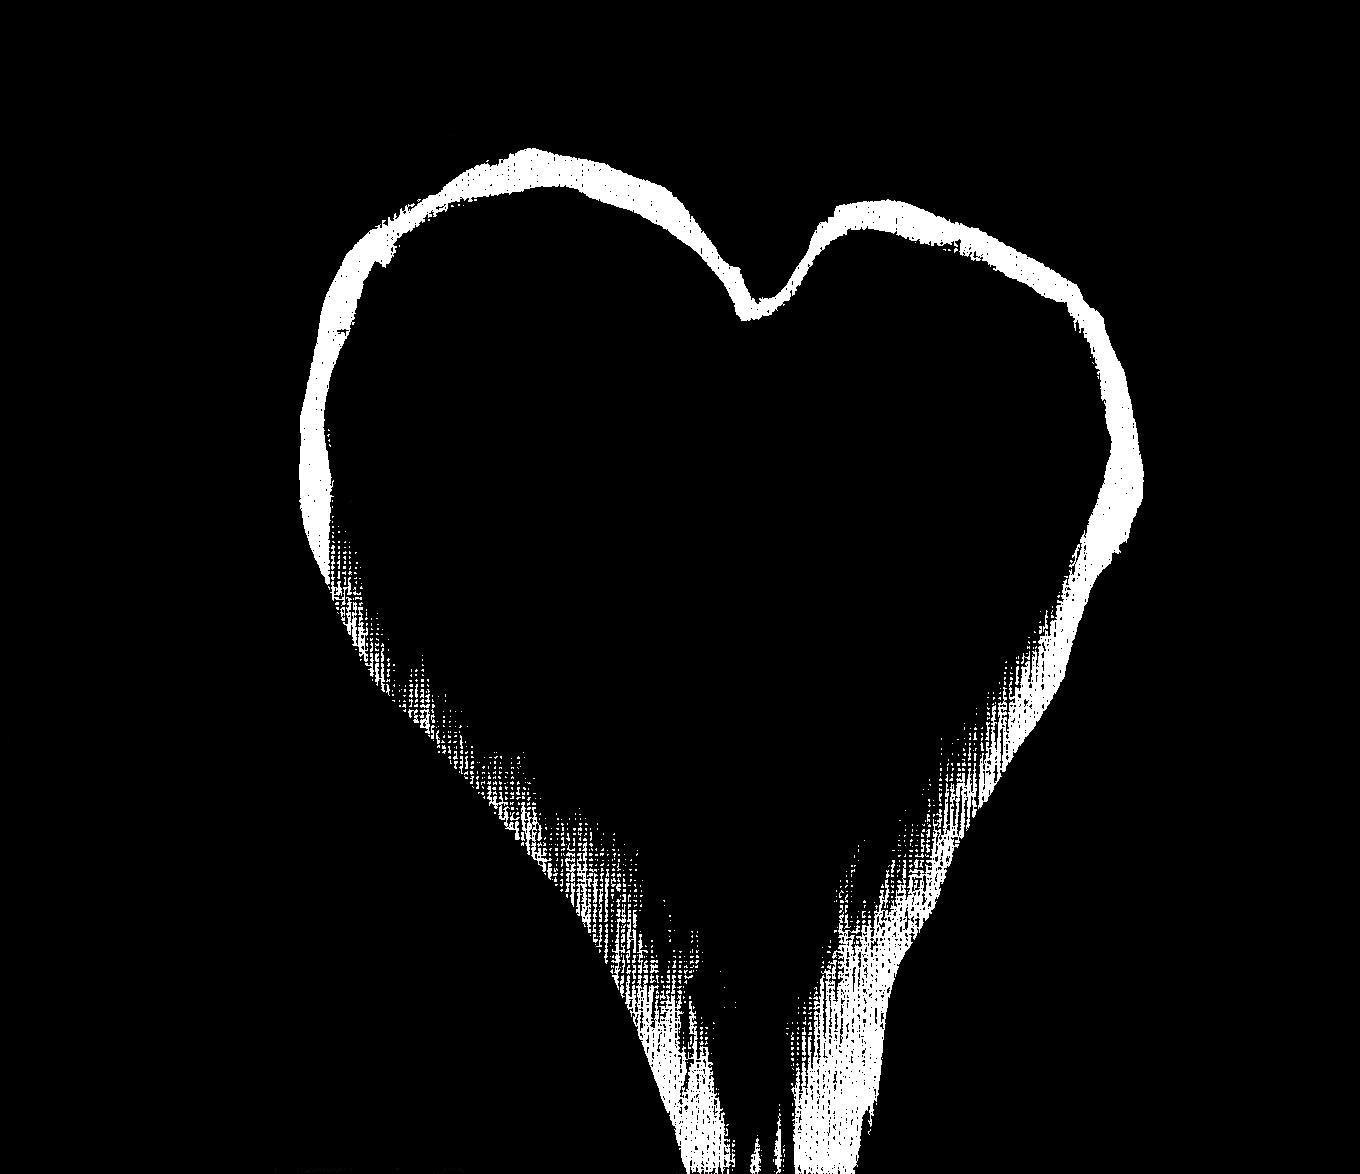 Bleeding Heart by goth_revolution